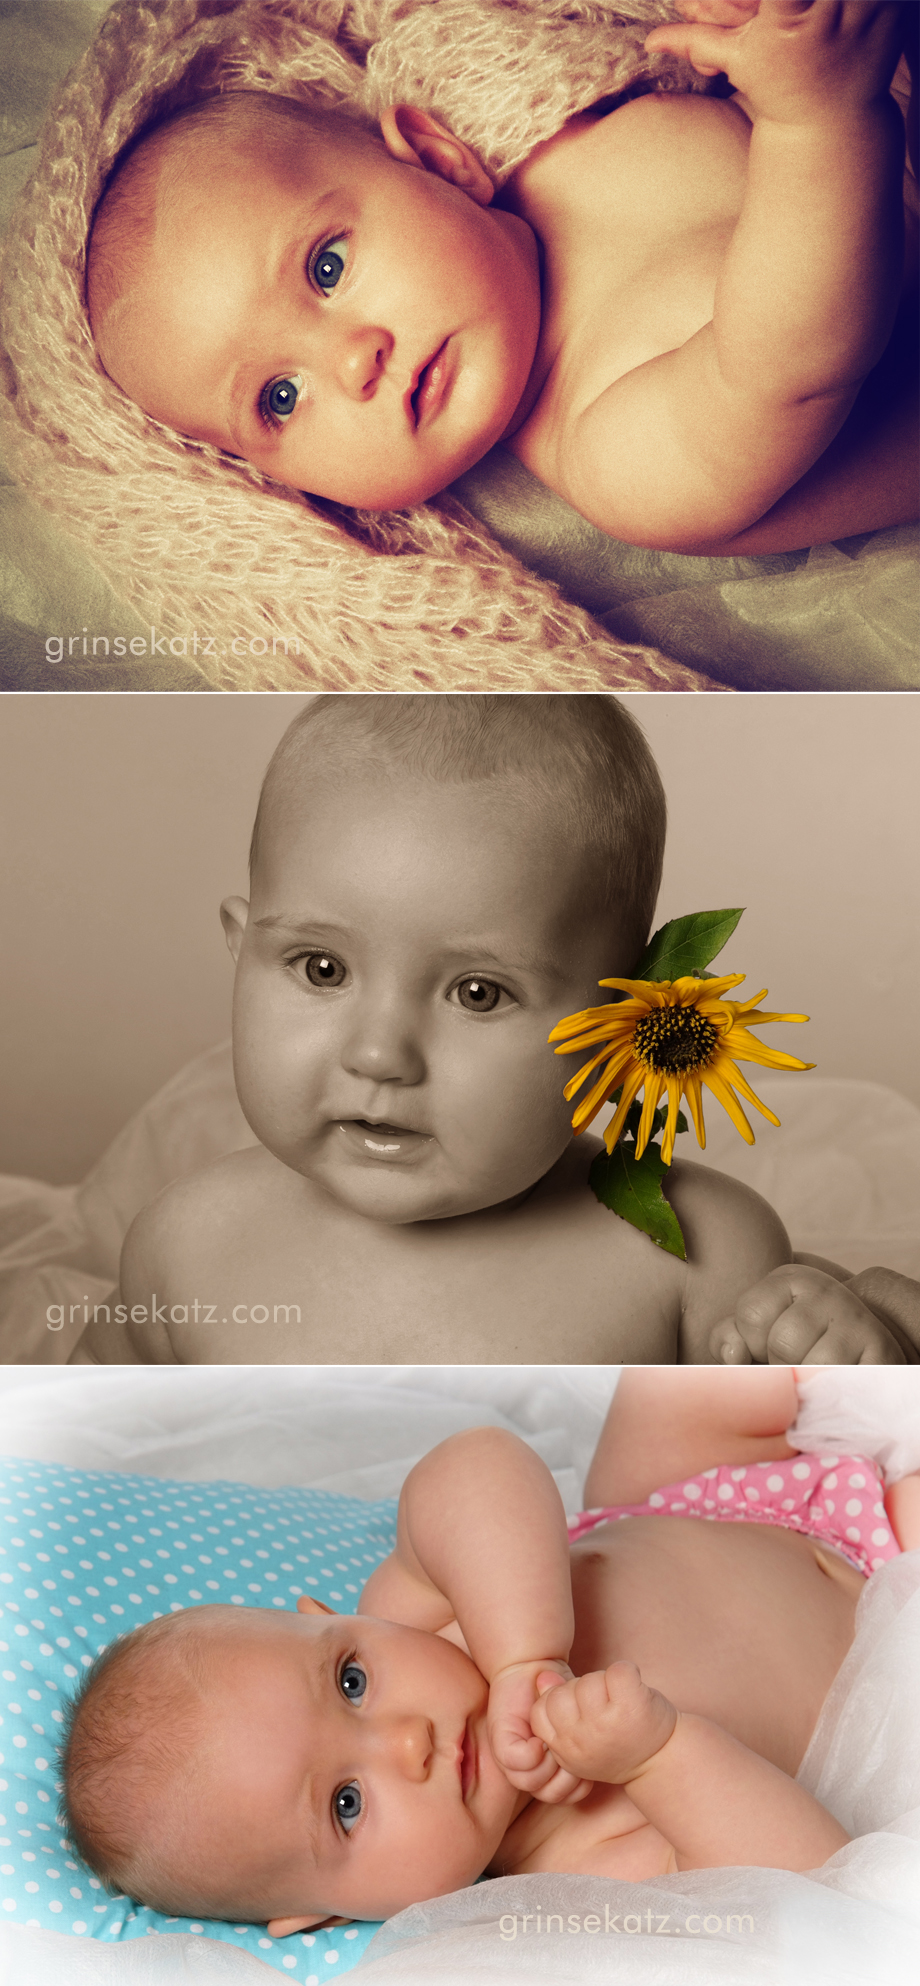 kinderfotografie Baby fotograf grinsekatz